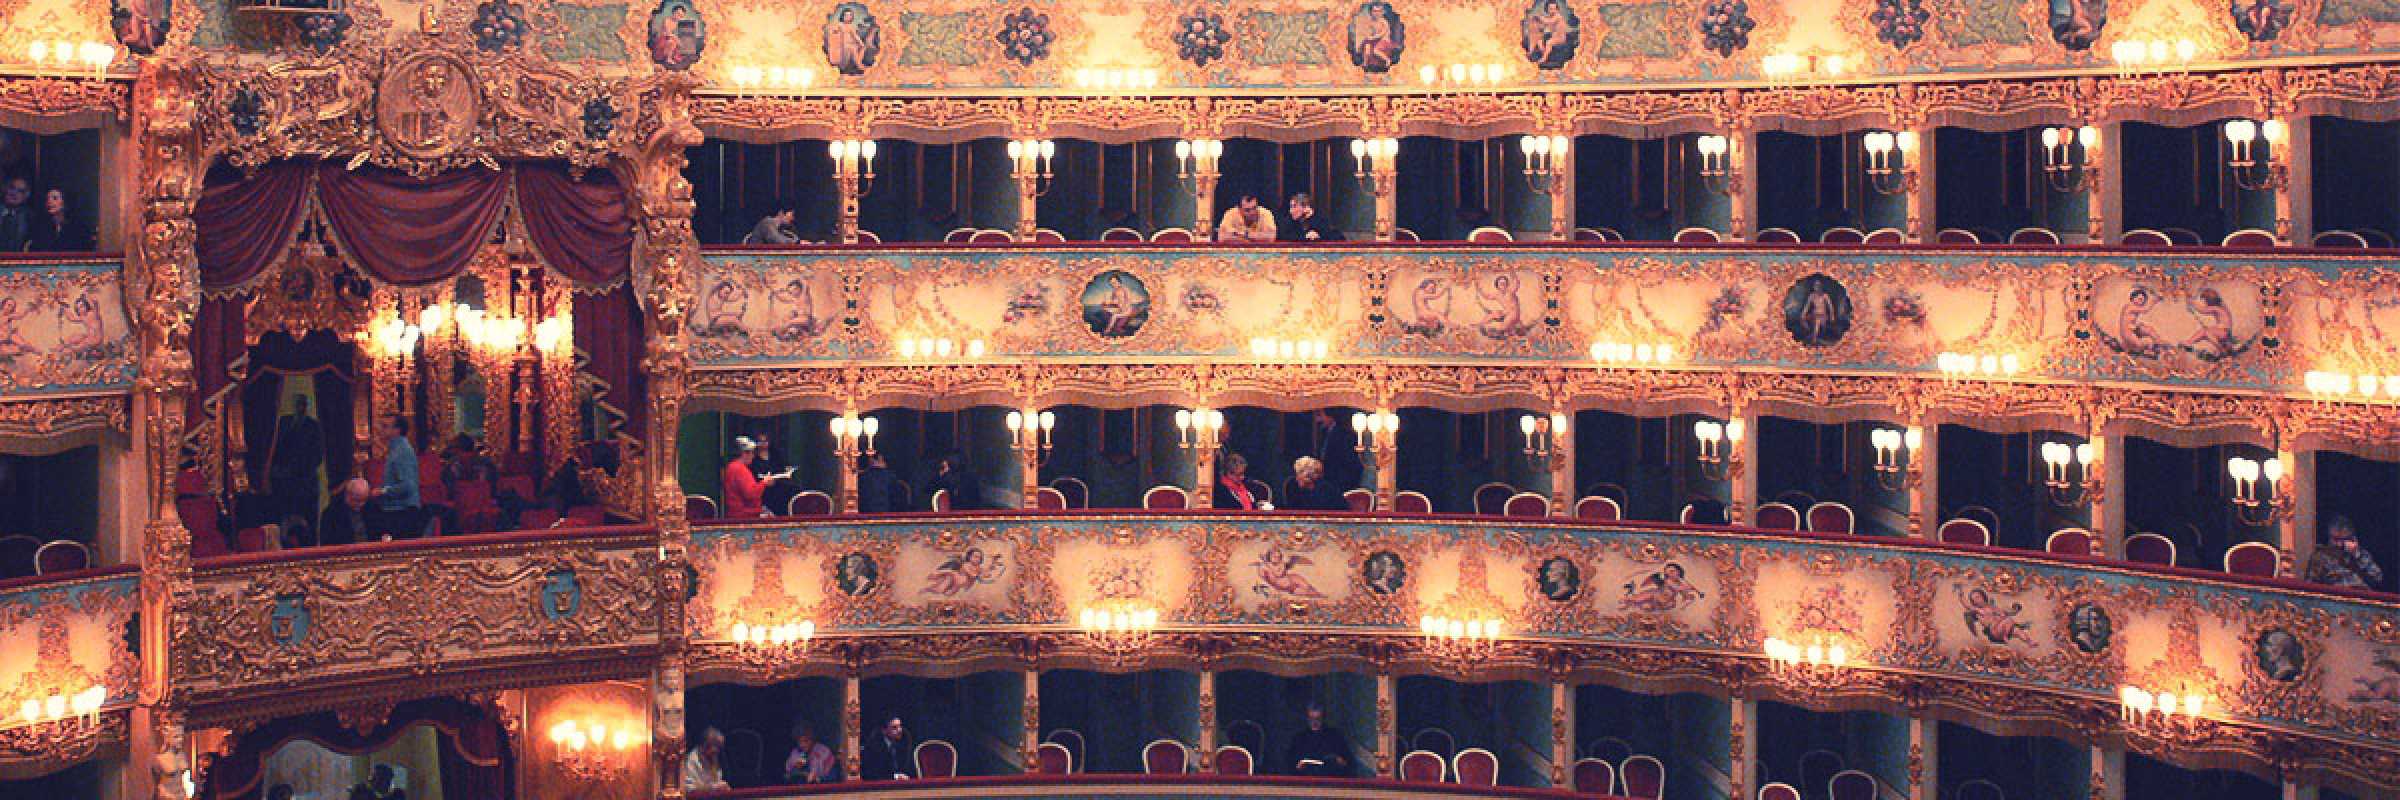 Gran Teatro La Fenice, interior